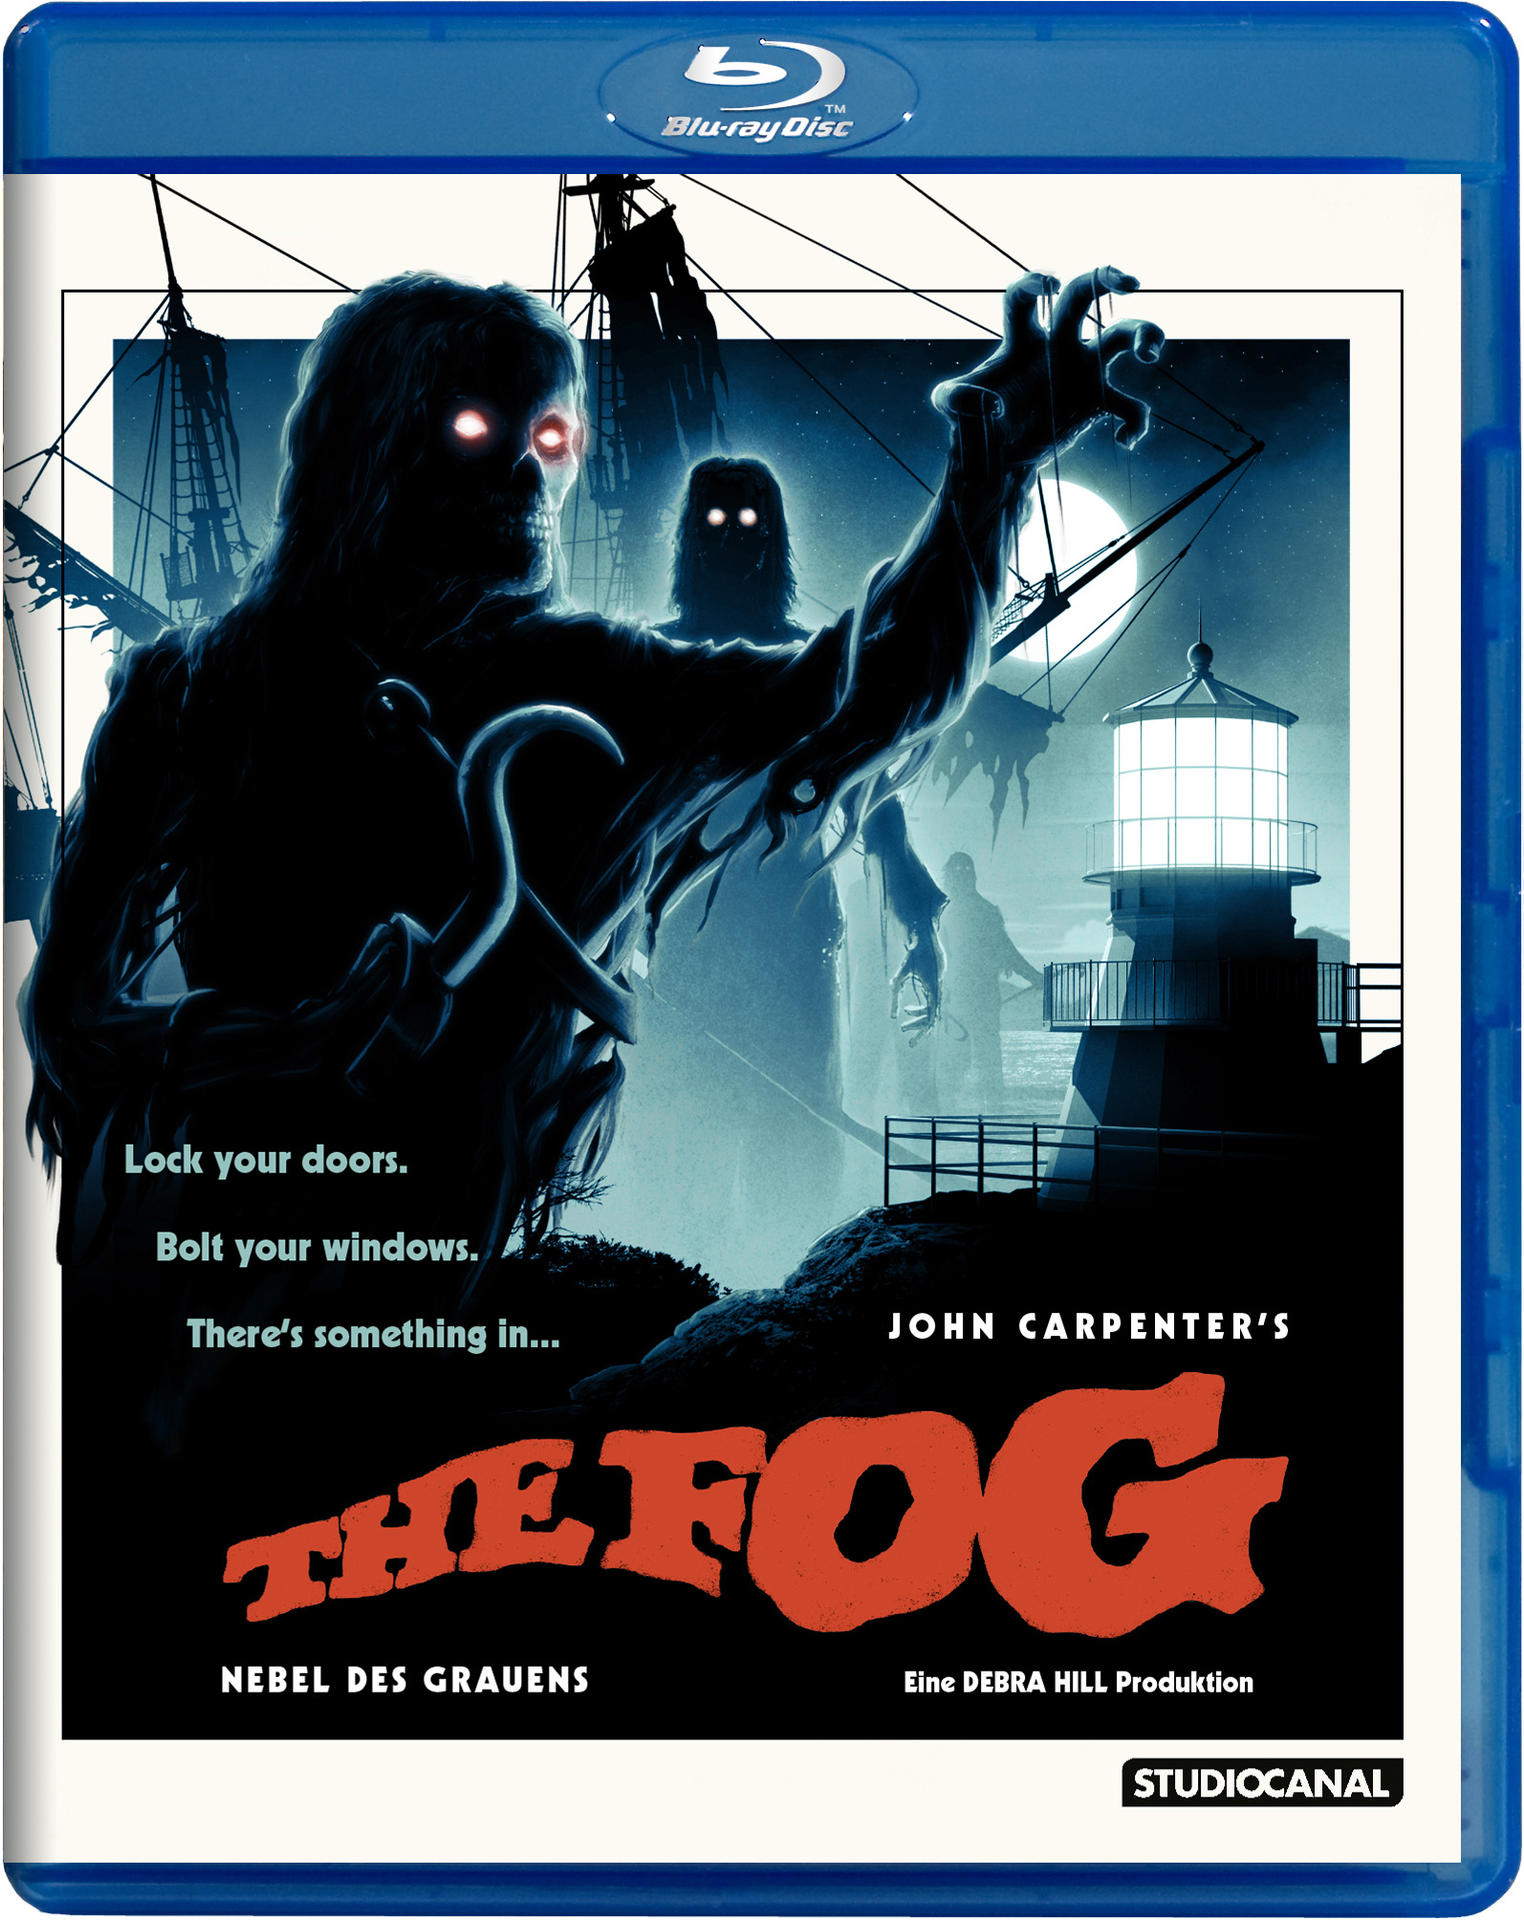 des The Blu-ray - Nebel Grauens Fog